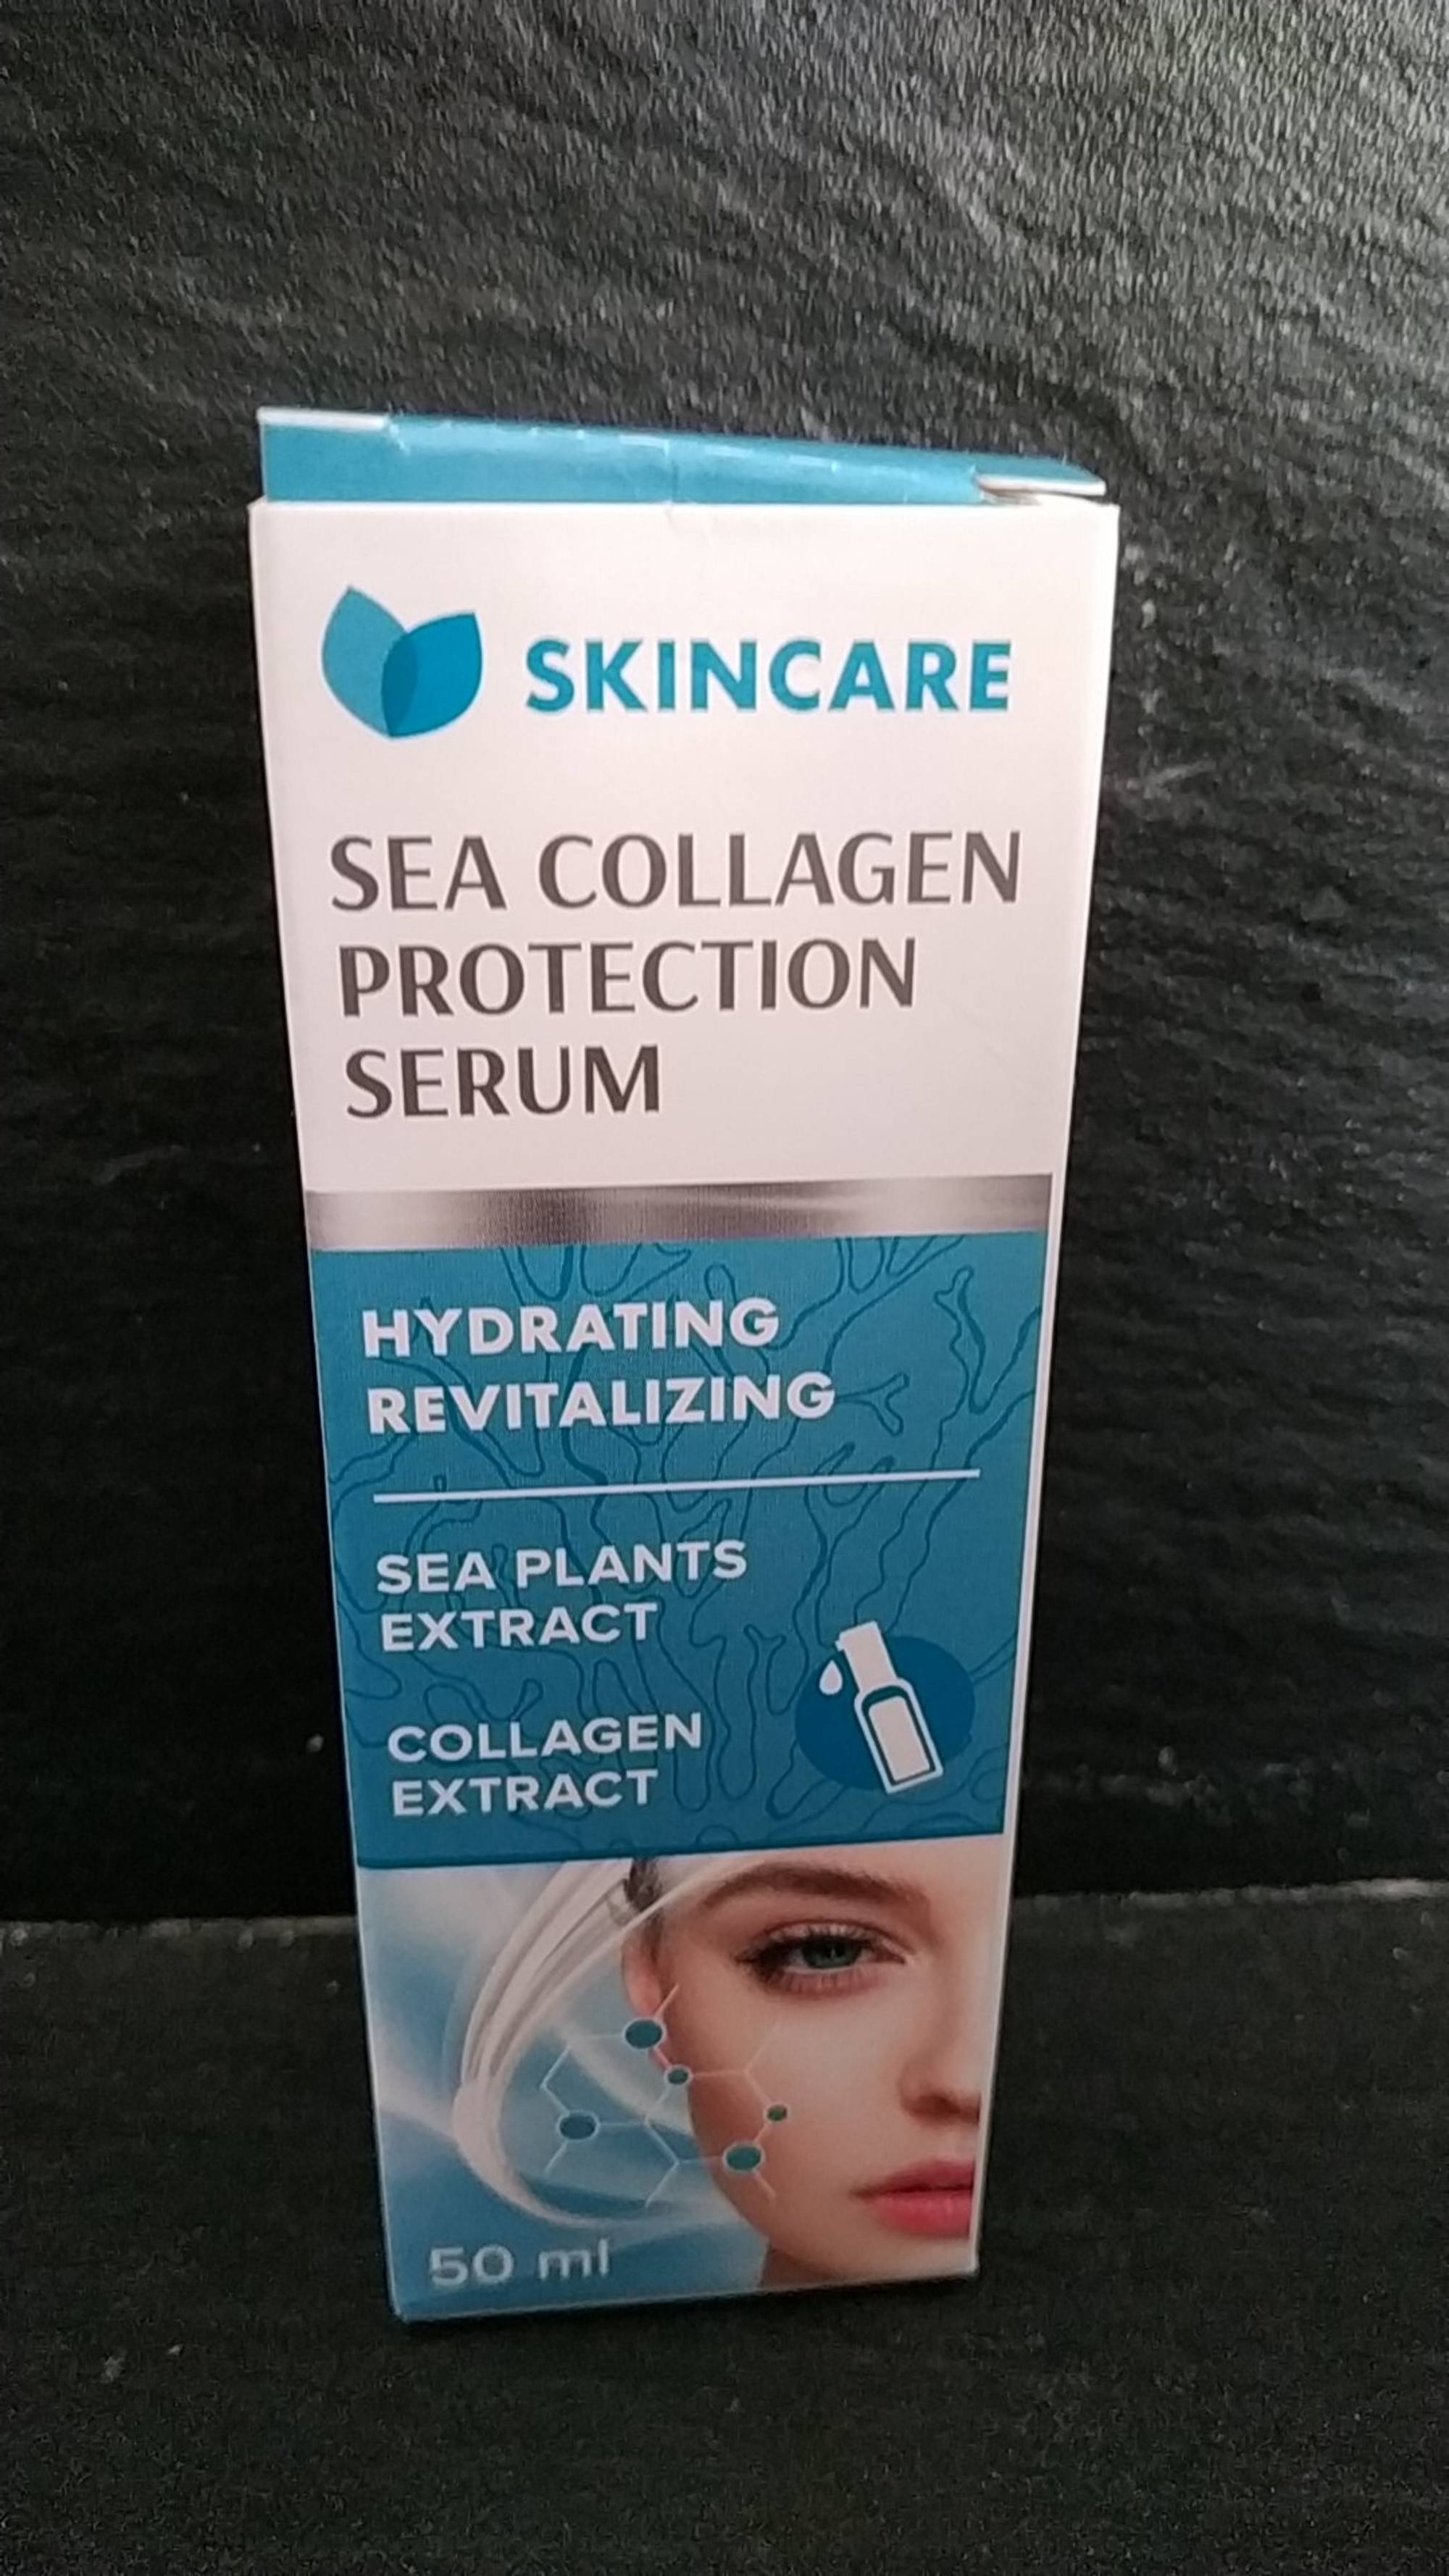 MASCOT EUROPE BV - Skincare - Sea collagen protection sérum